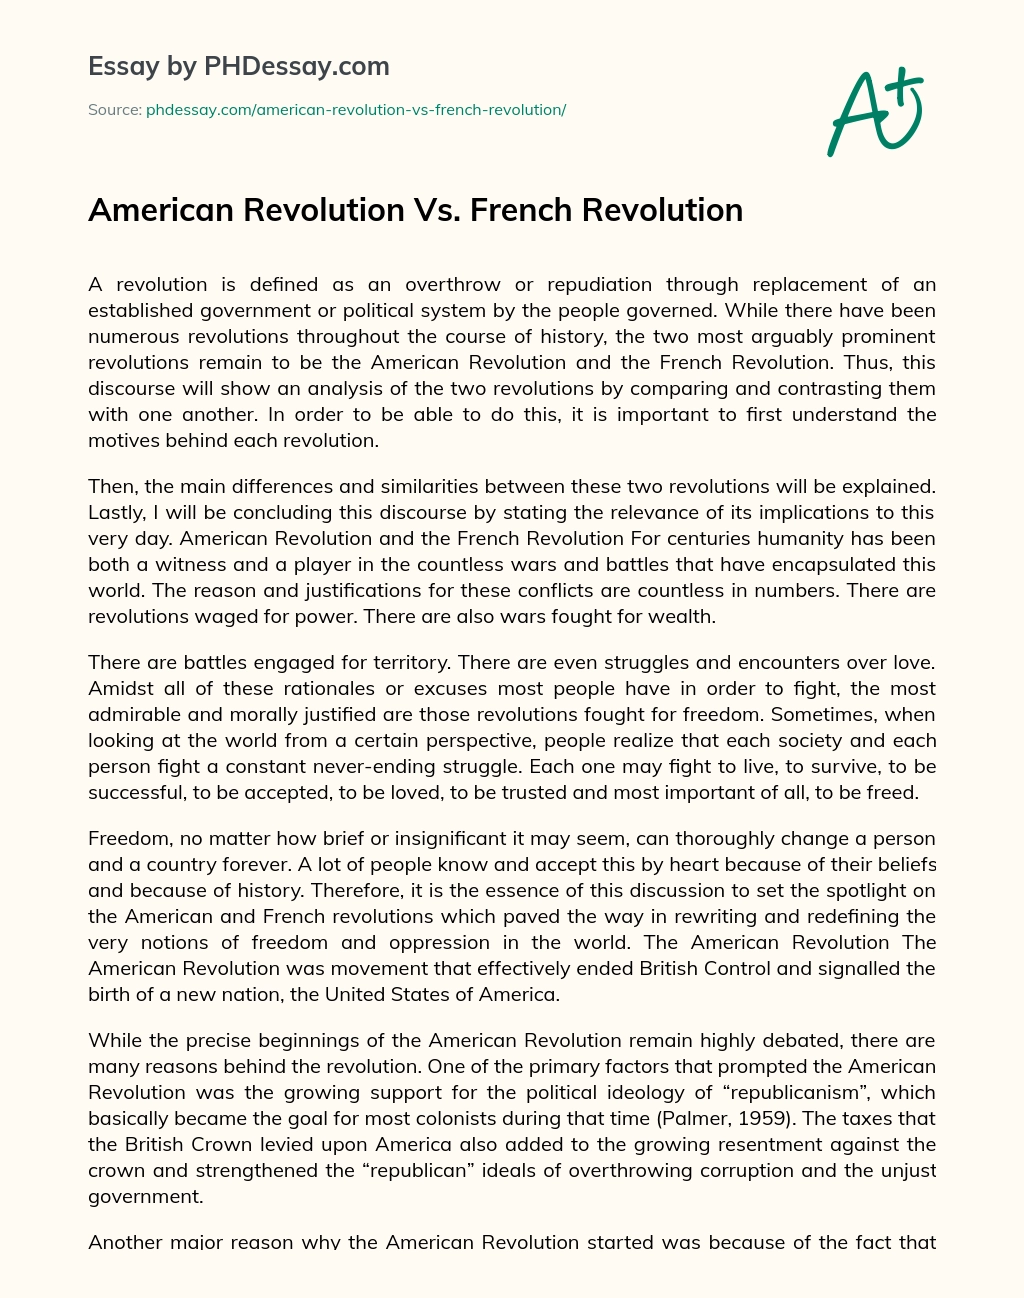 American Revolution Vs. French Revolution essay